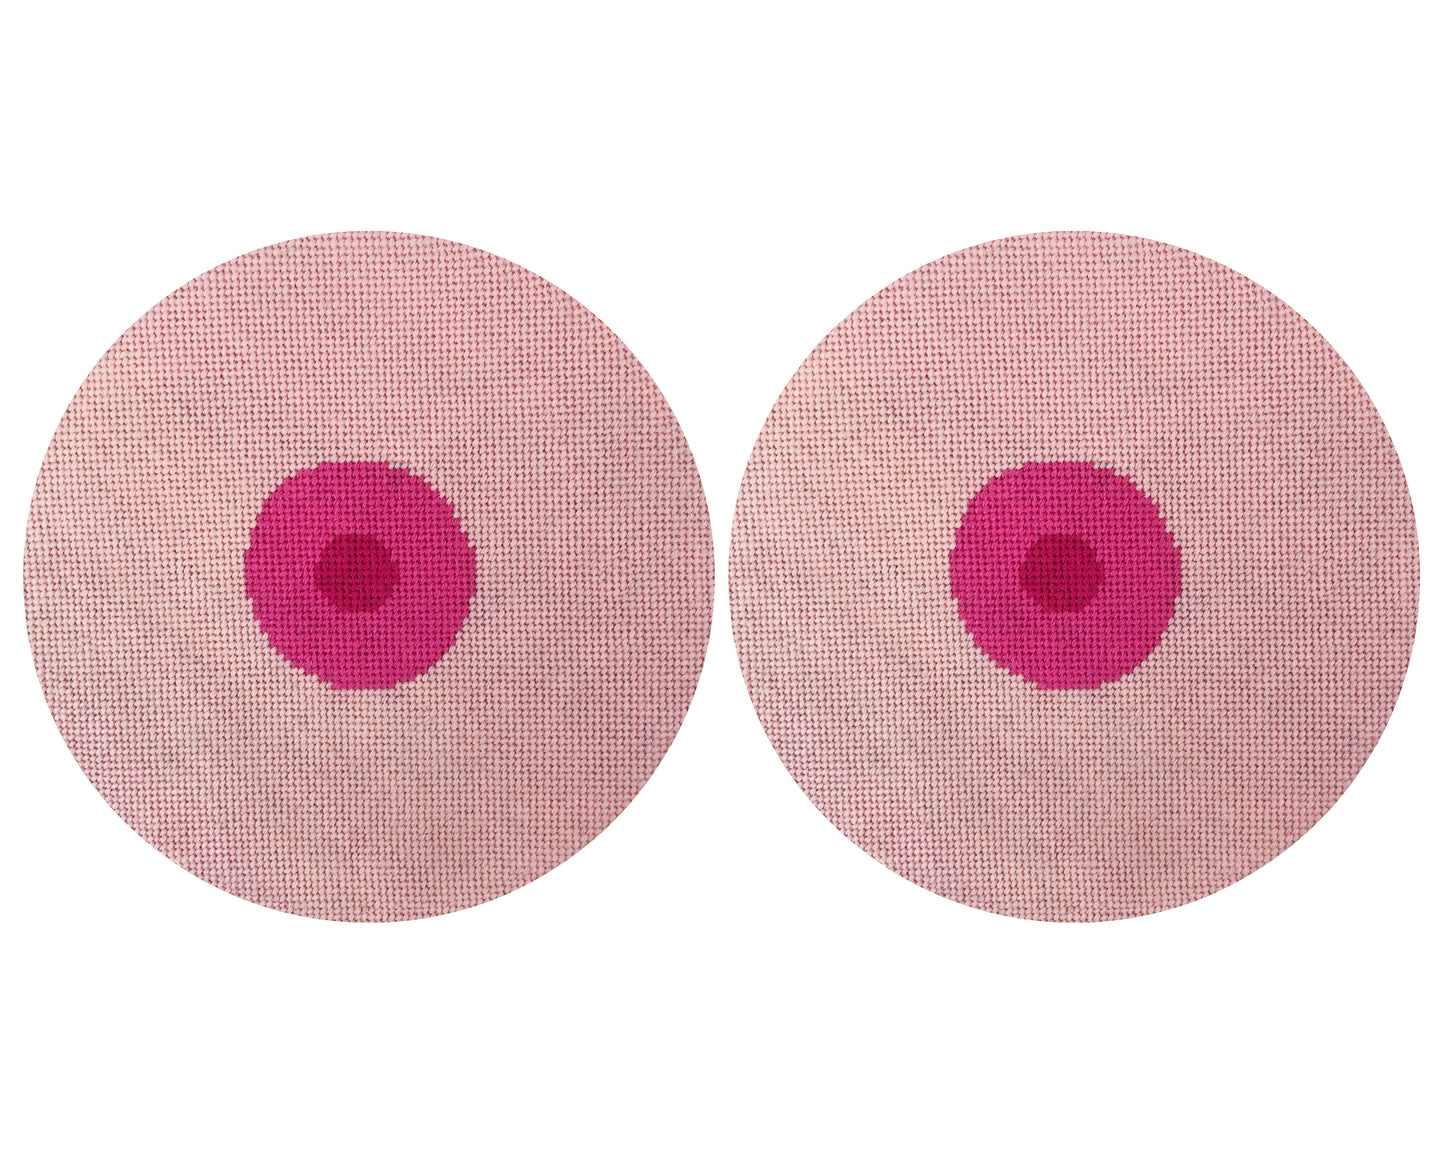 pink boob notecard